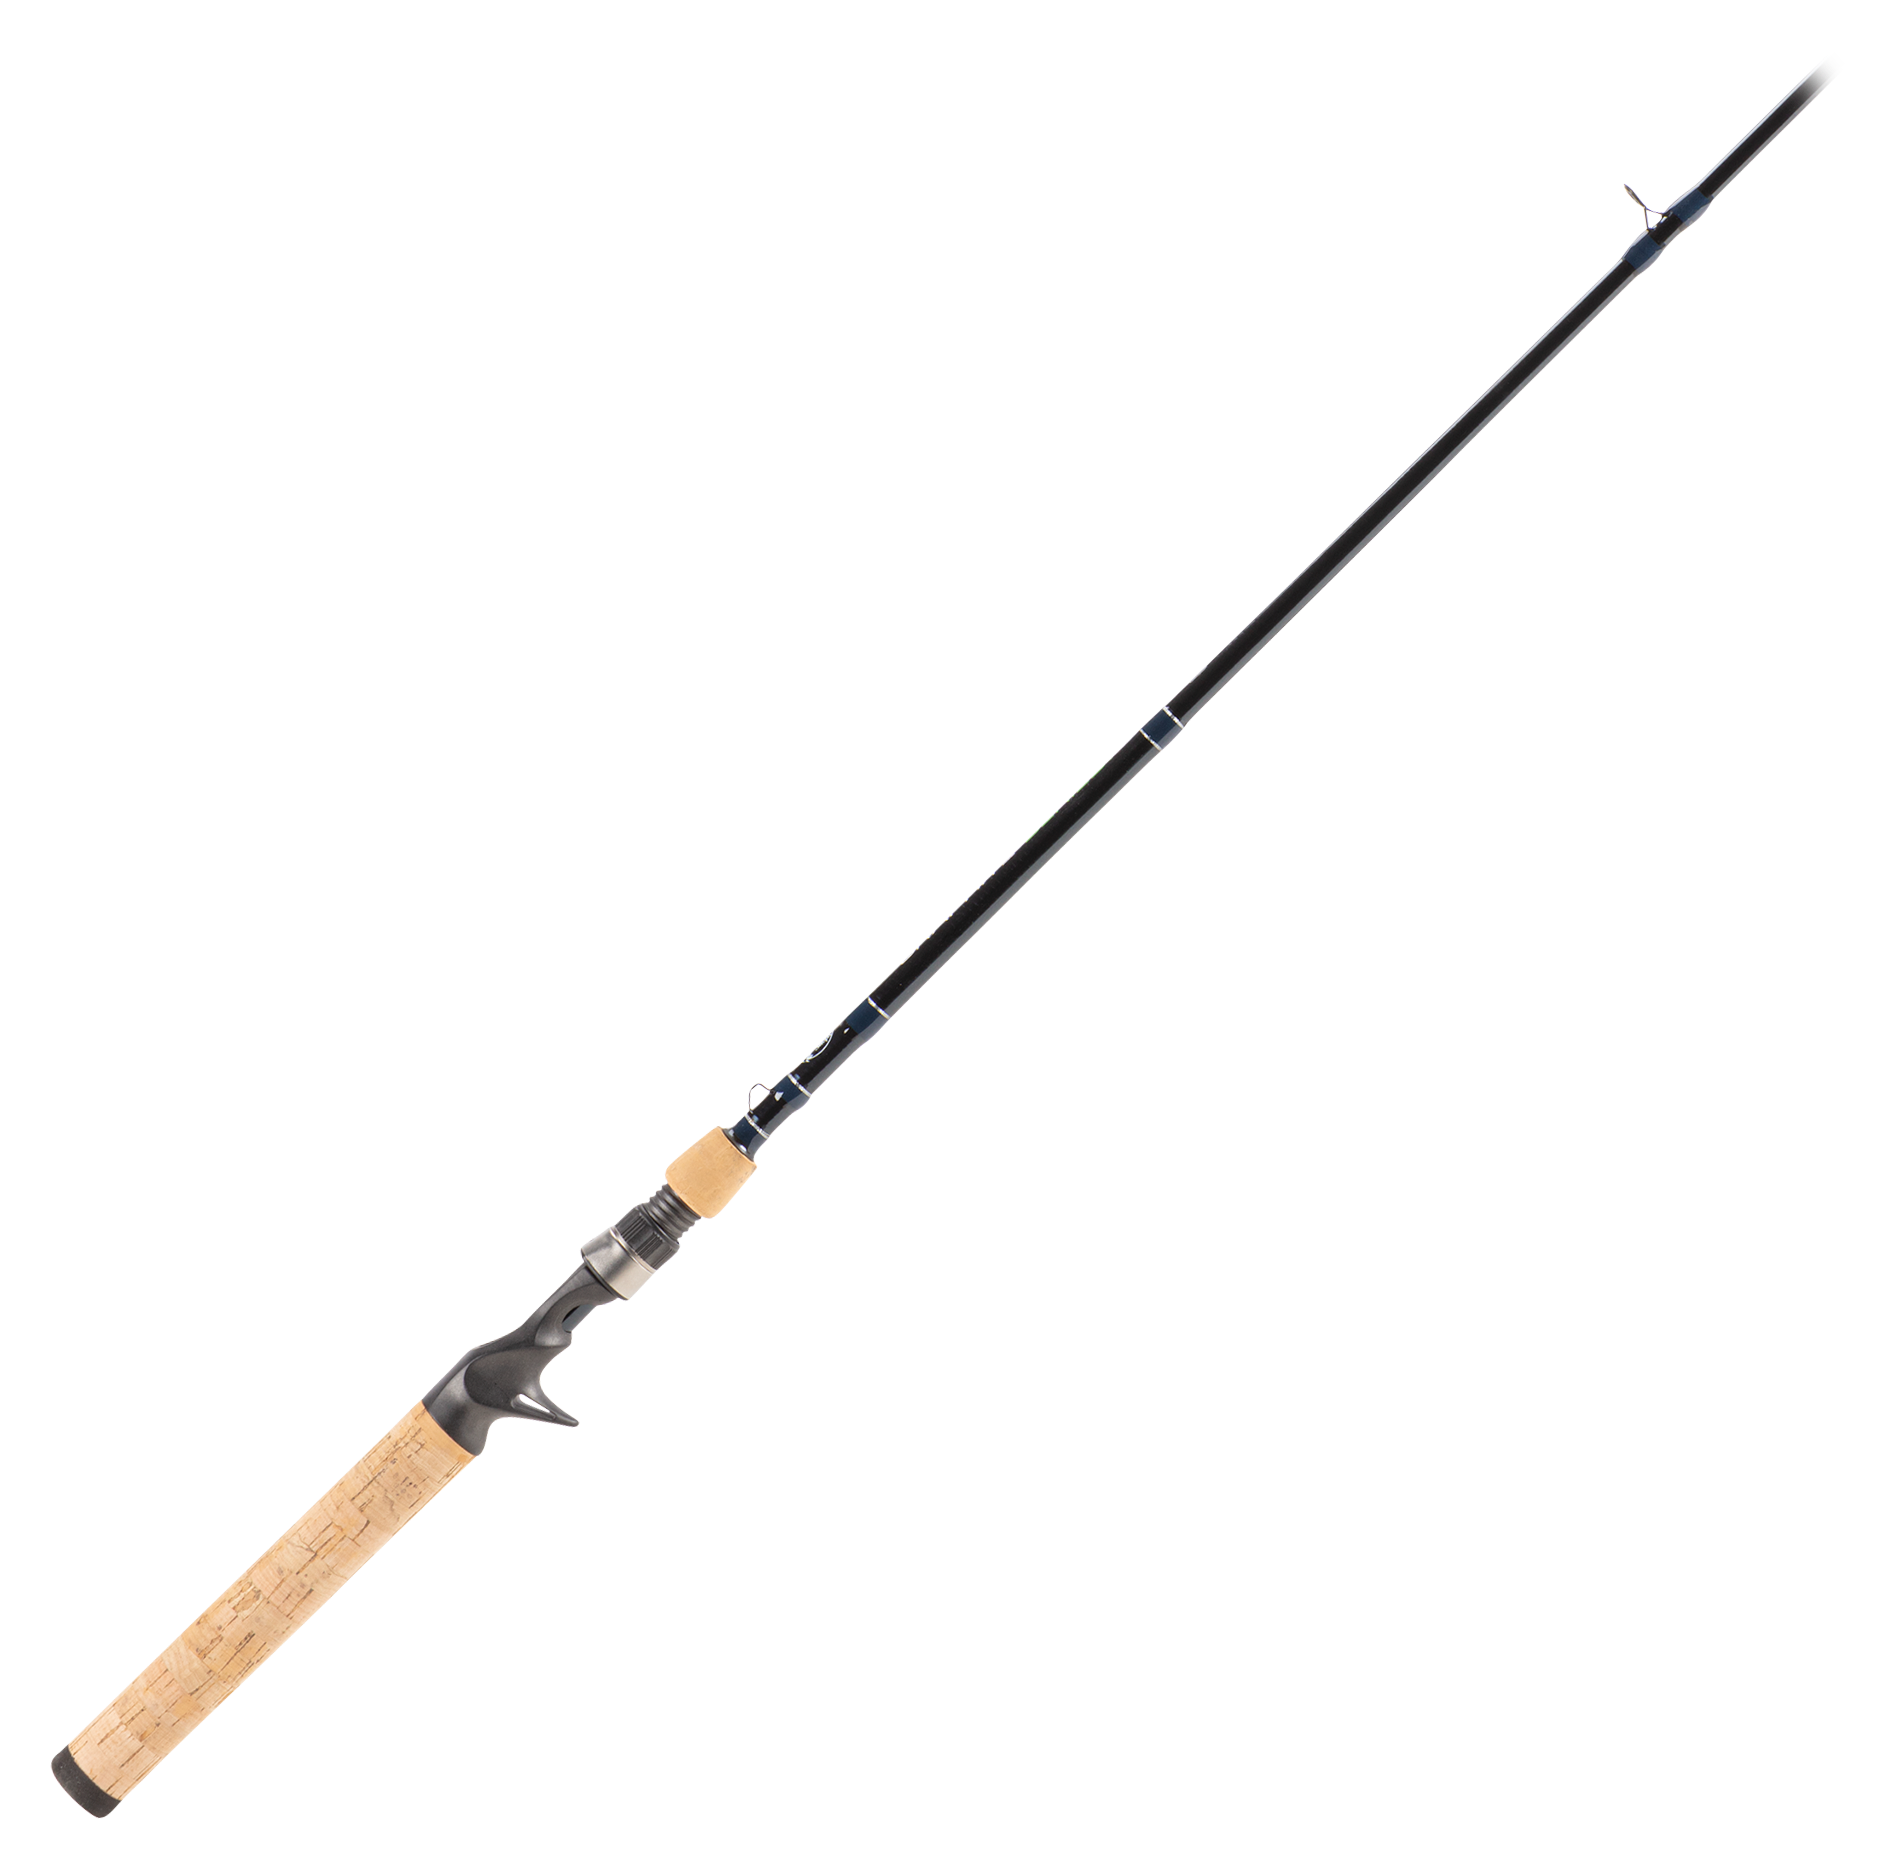 Bass Pro Shops Graphite Series Casting Rod - 7'6 - Medium Heavy - Retractable Butt Section - D